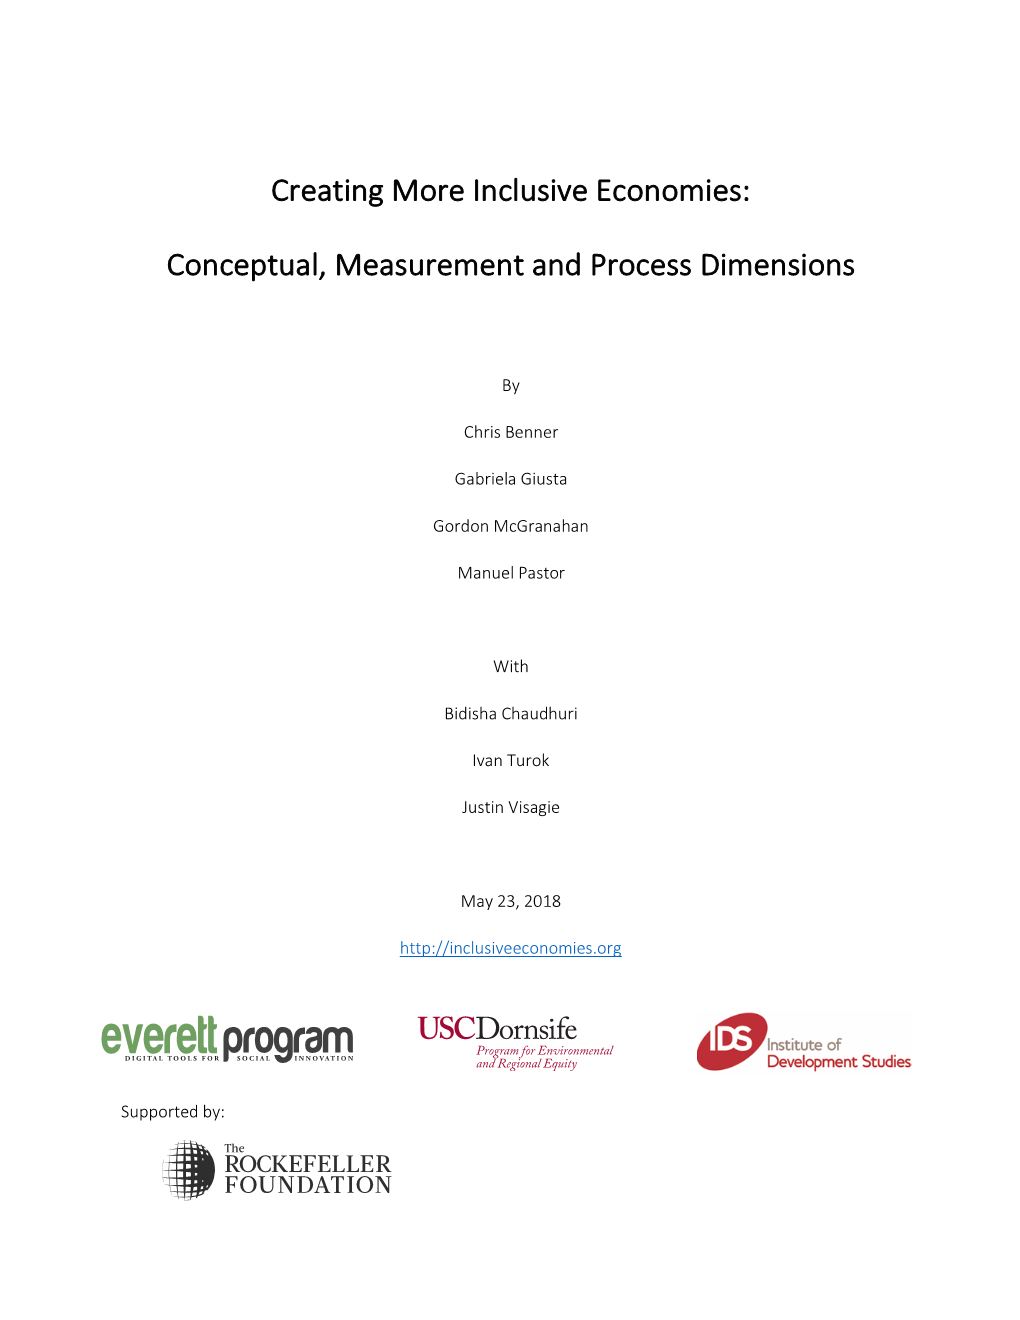 Creating More Inclusive Economies: Conceptual, Measurement And